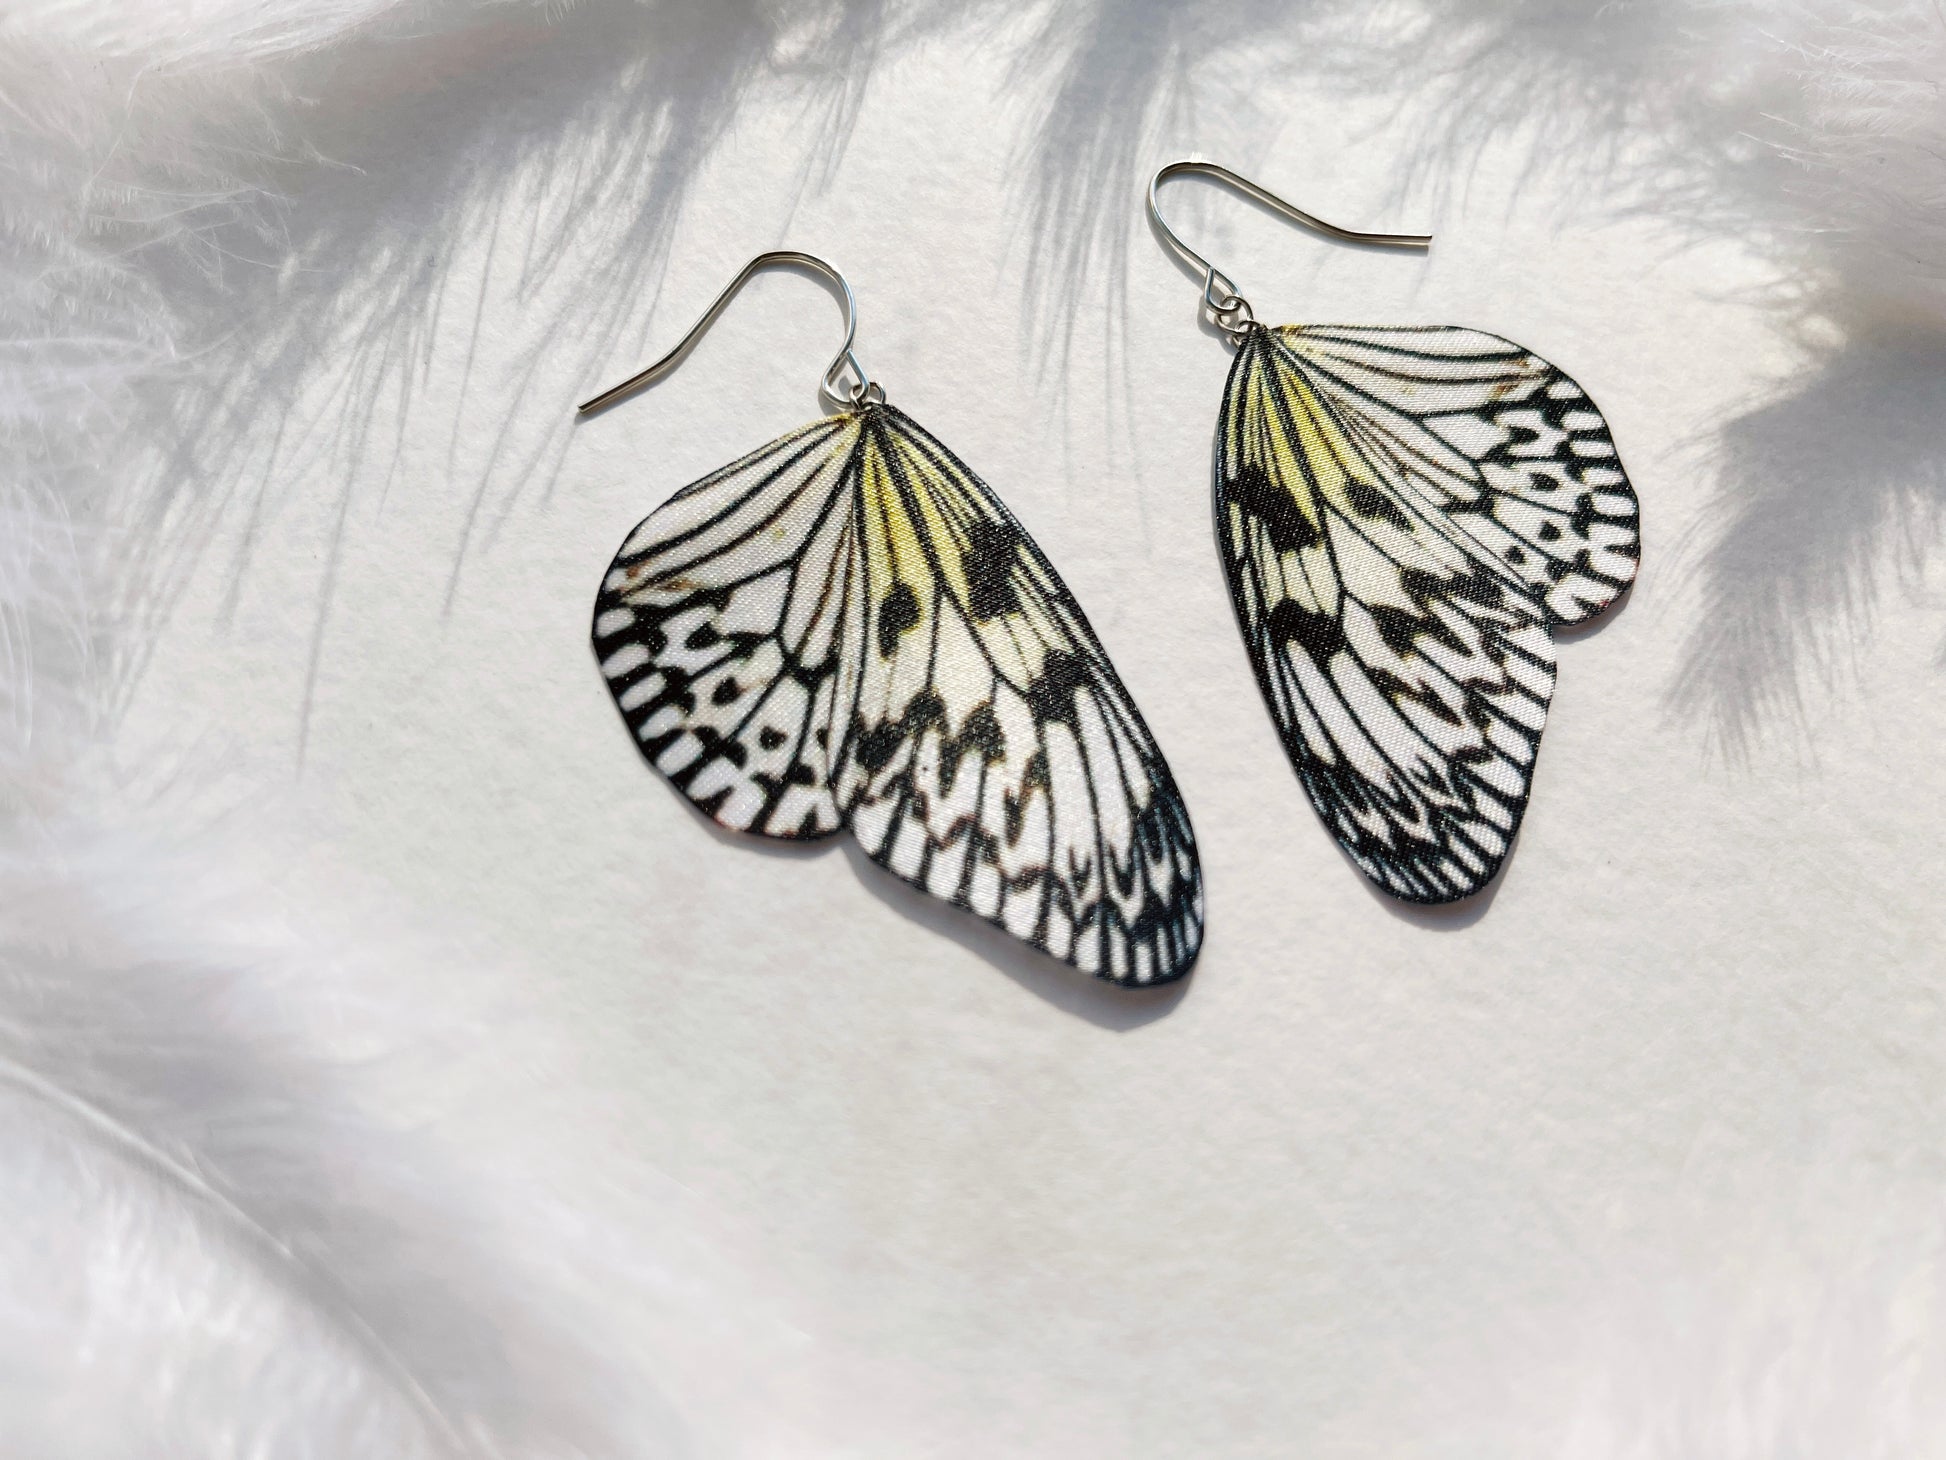 Boho Style Butterfly Earrings with Paper Kite Wings